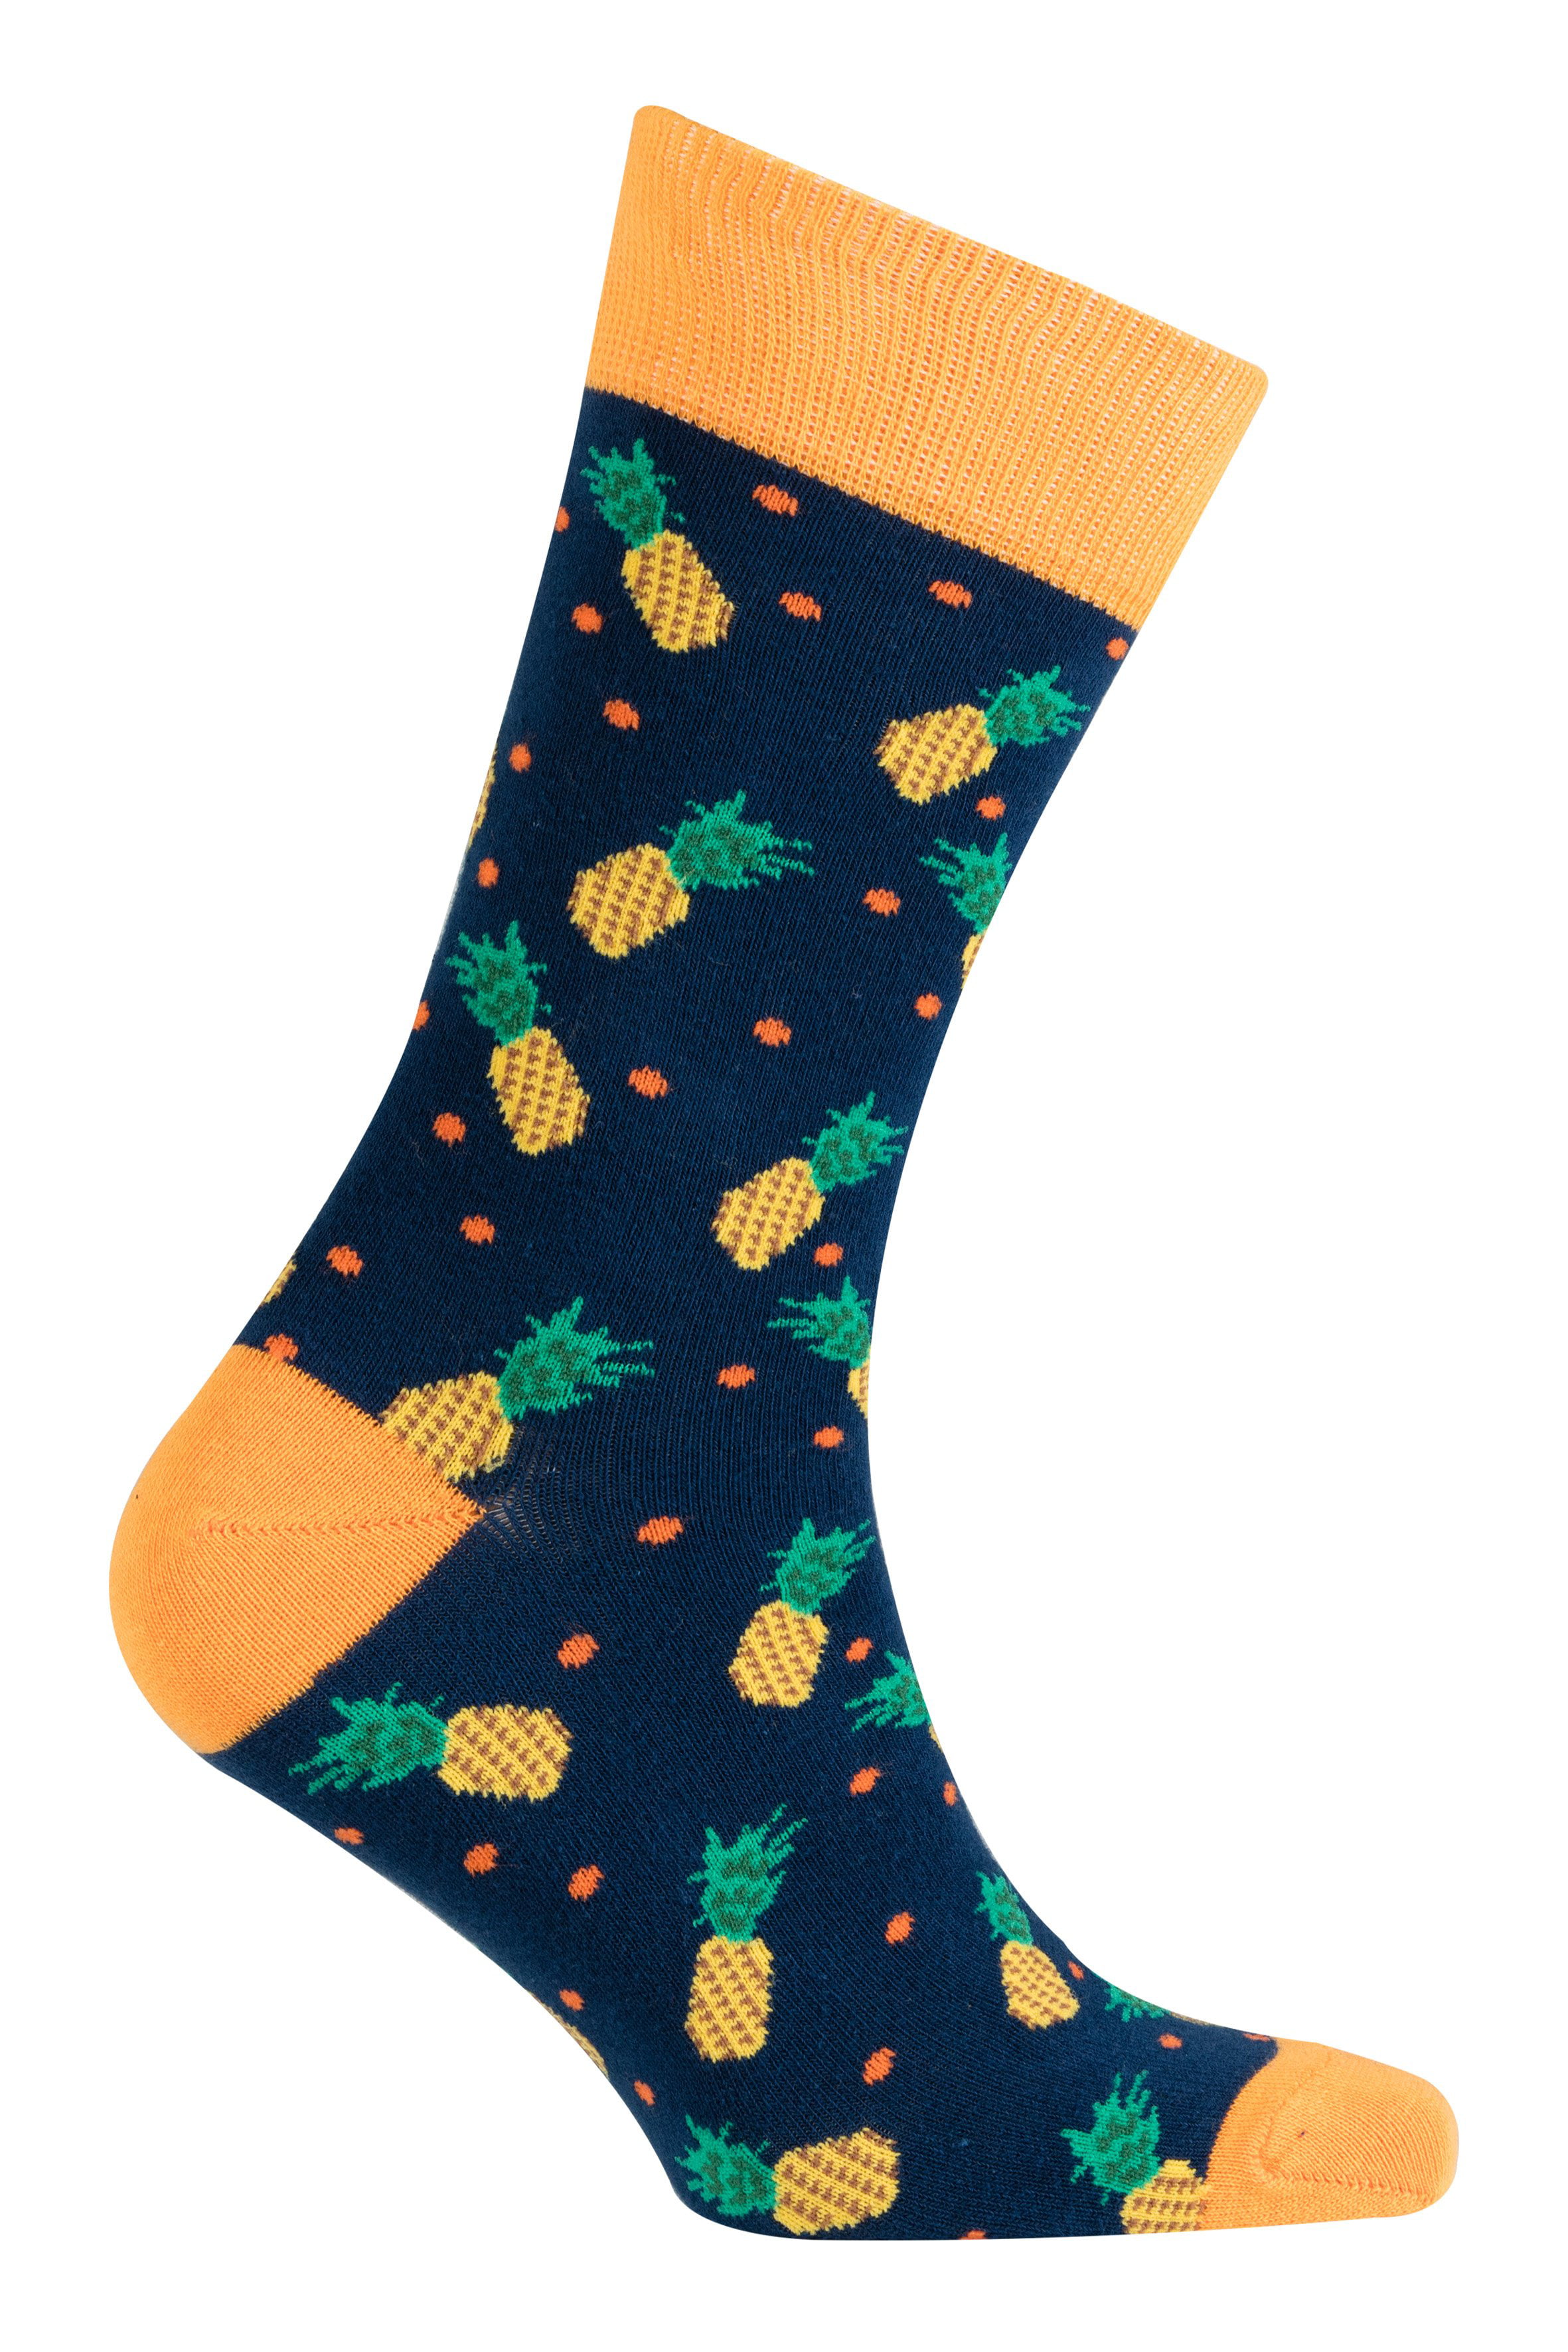 Pineapple Socks - Walmart.com